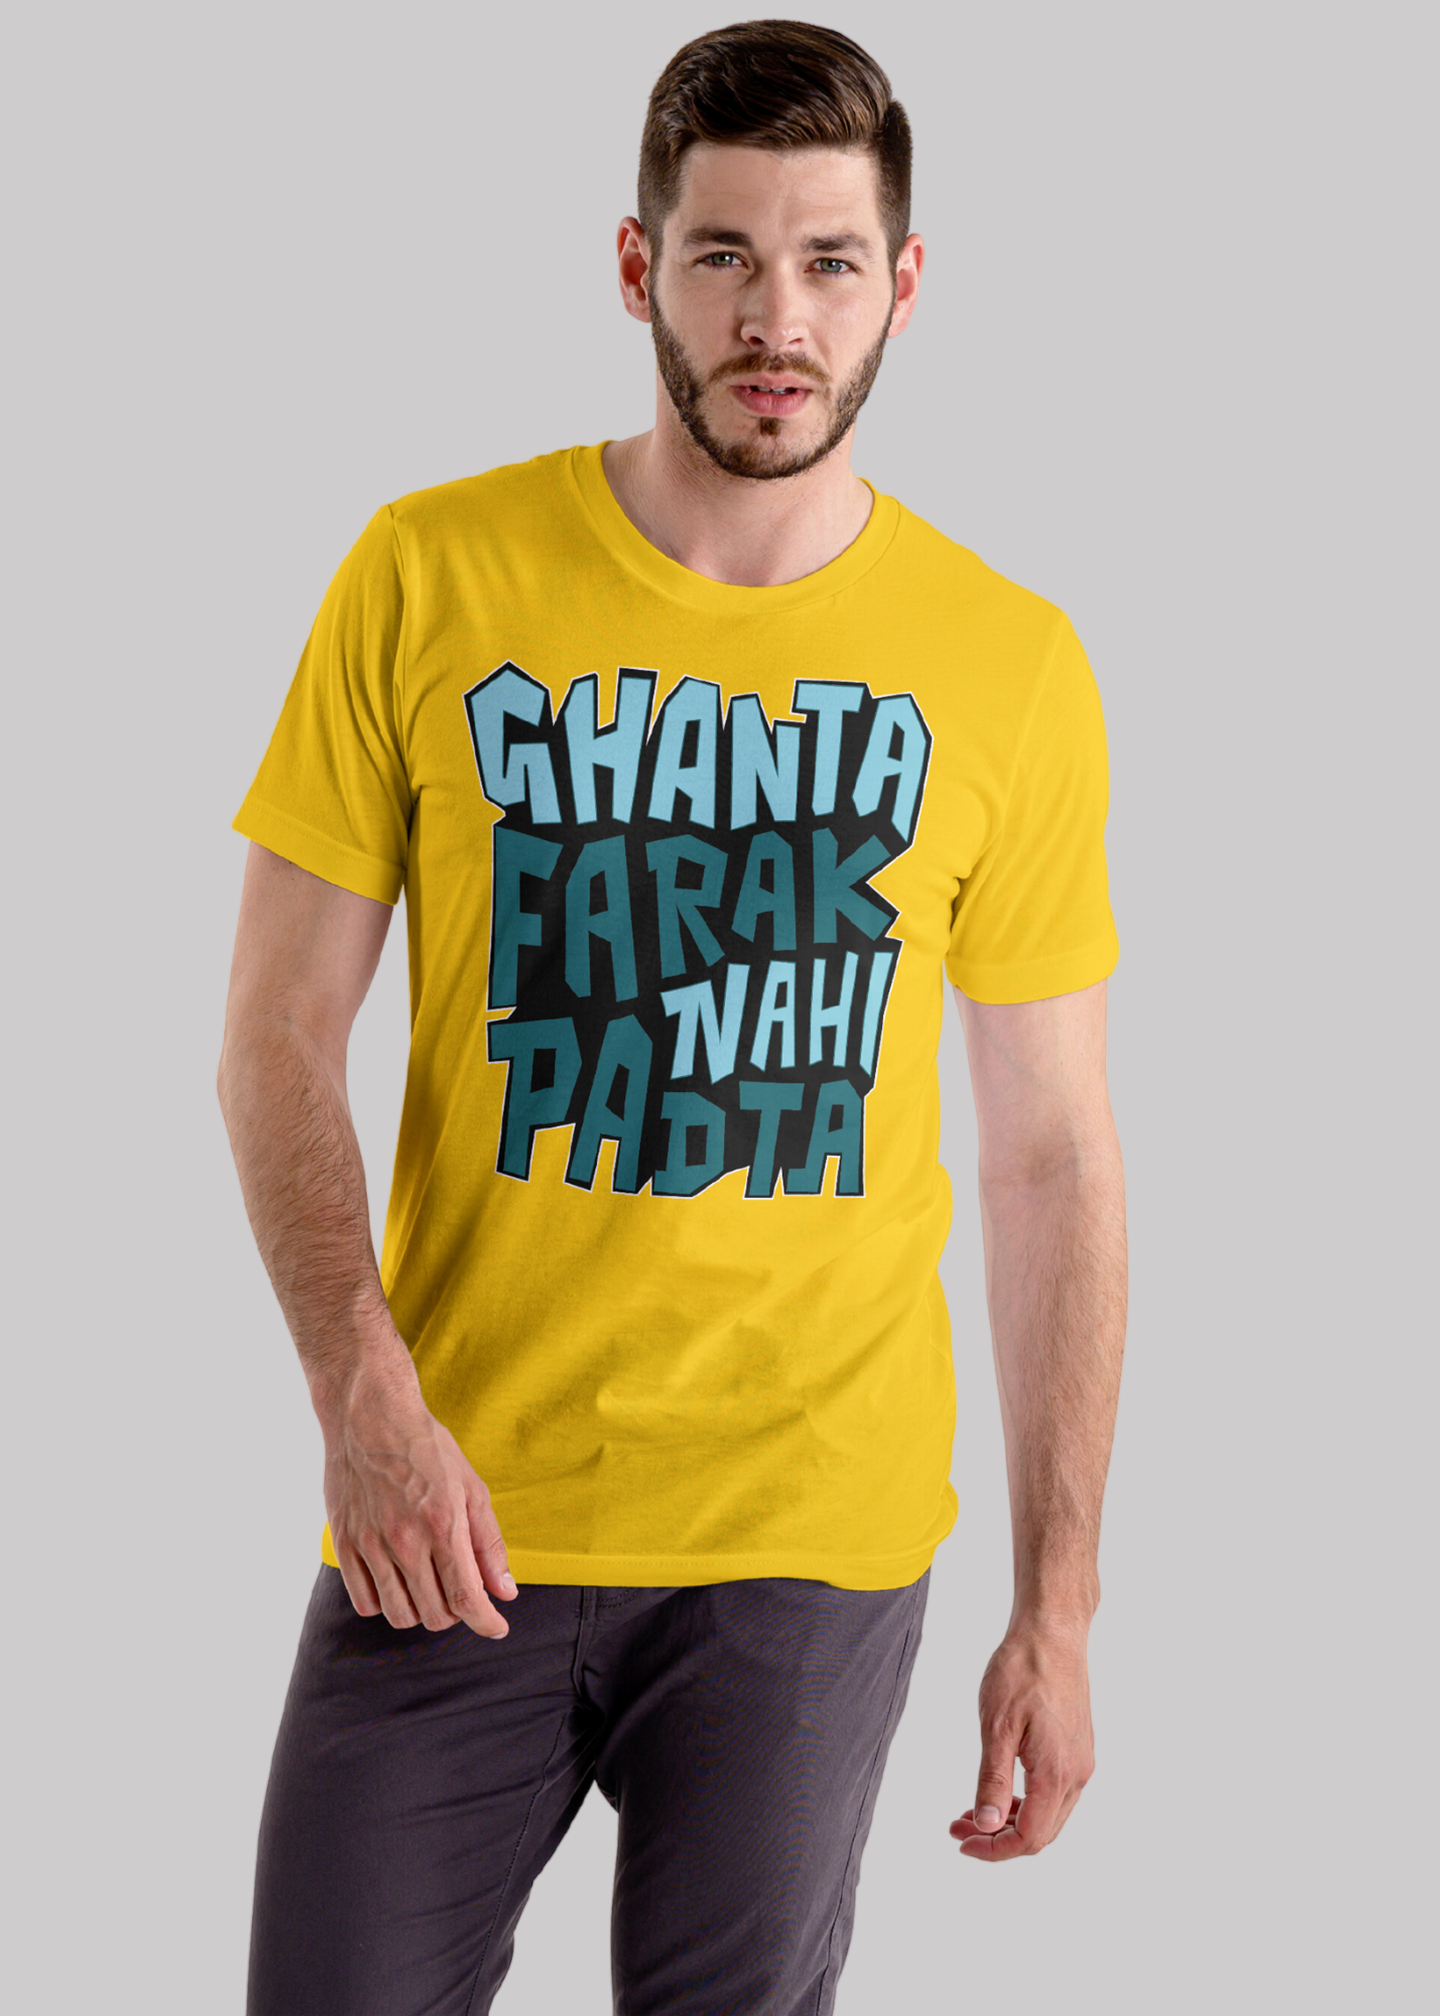 Ghanta farak nahi padta Printed Half Sleeve Premium Cotton T-shirt For Men